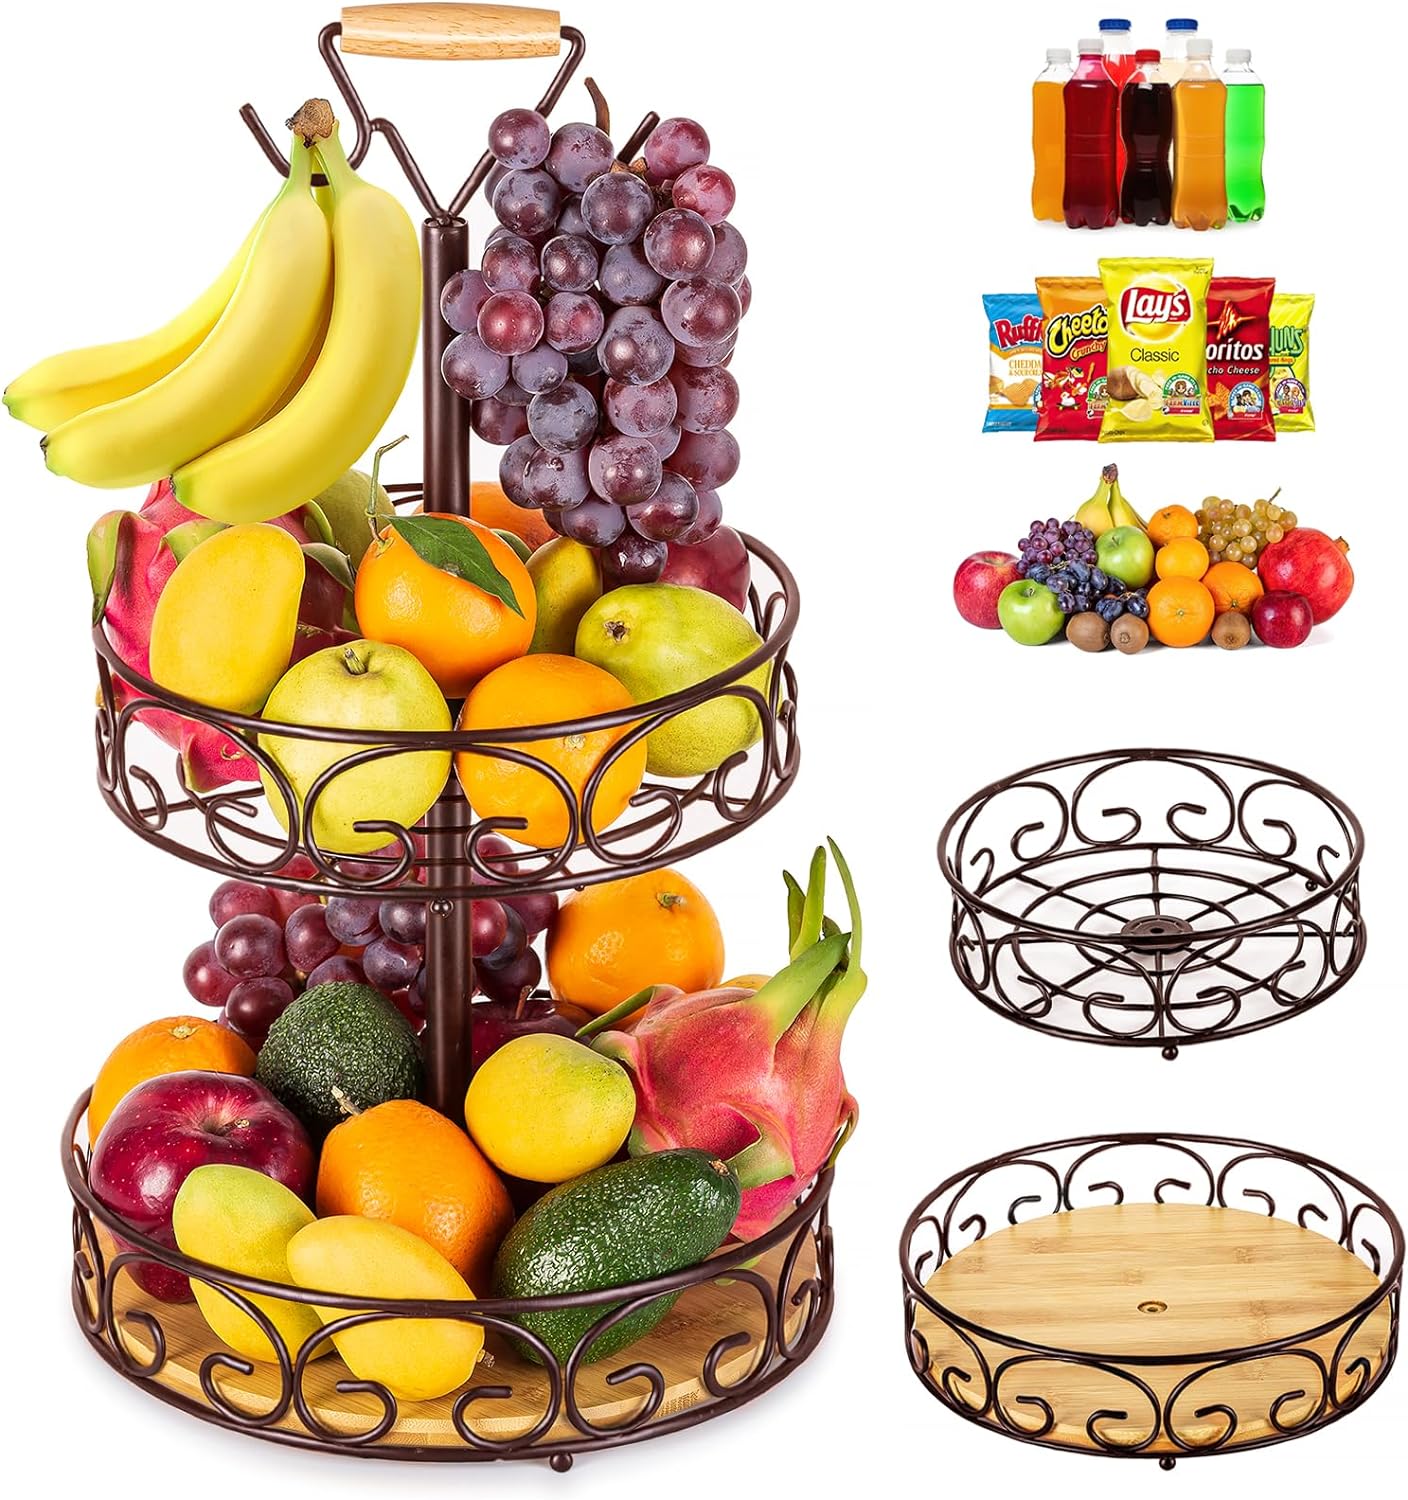 ETECHMART Fruit Basket Vegetables Countertop Bowl with Banana Hanger Brown / Bamboo&Iron - 3Tier